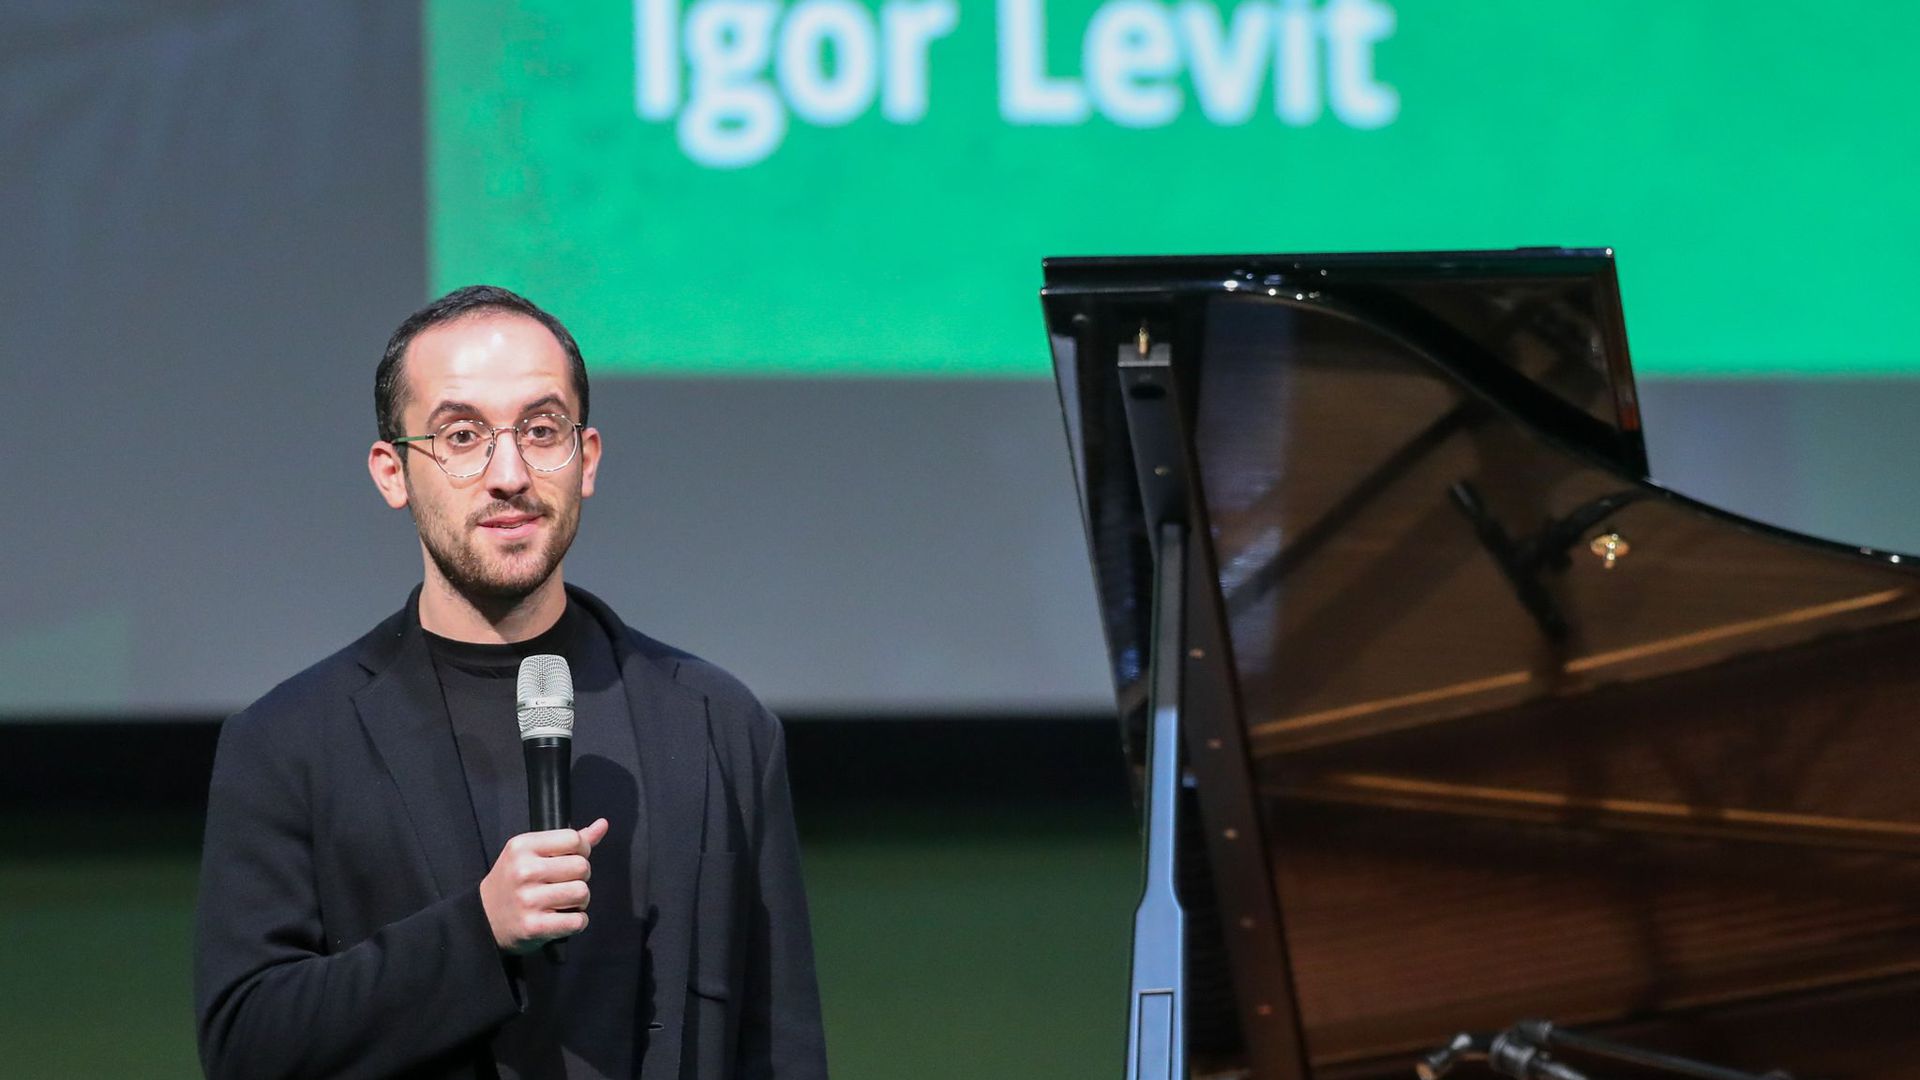 Der Pianist Igor Levit.